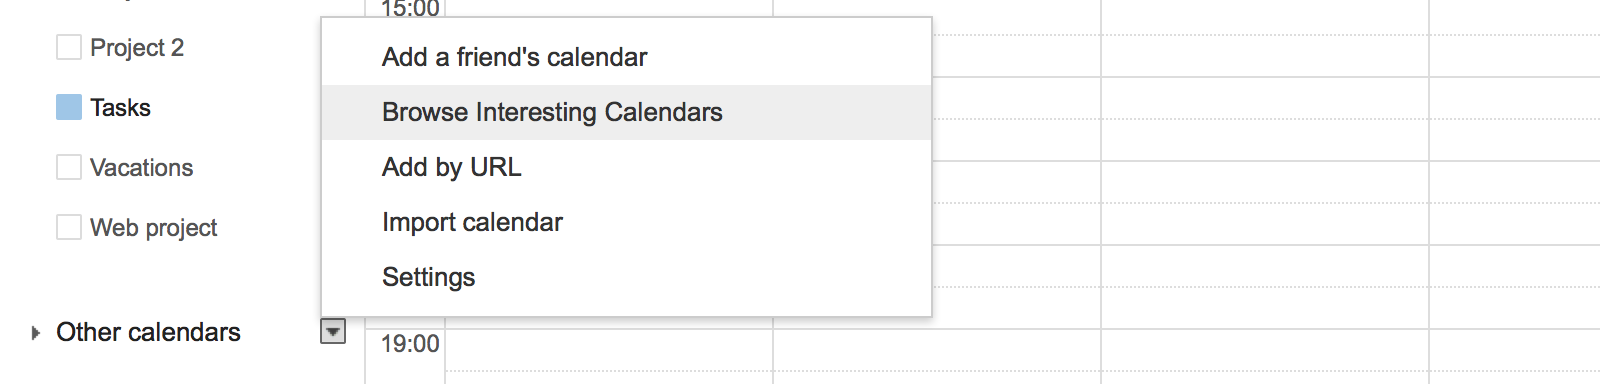 Add public calendars to your Google Calendar